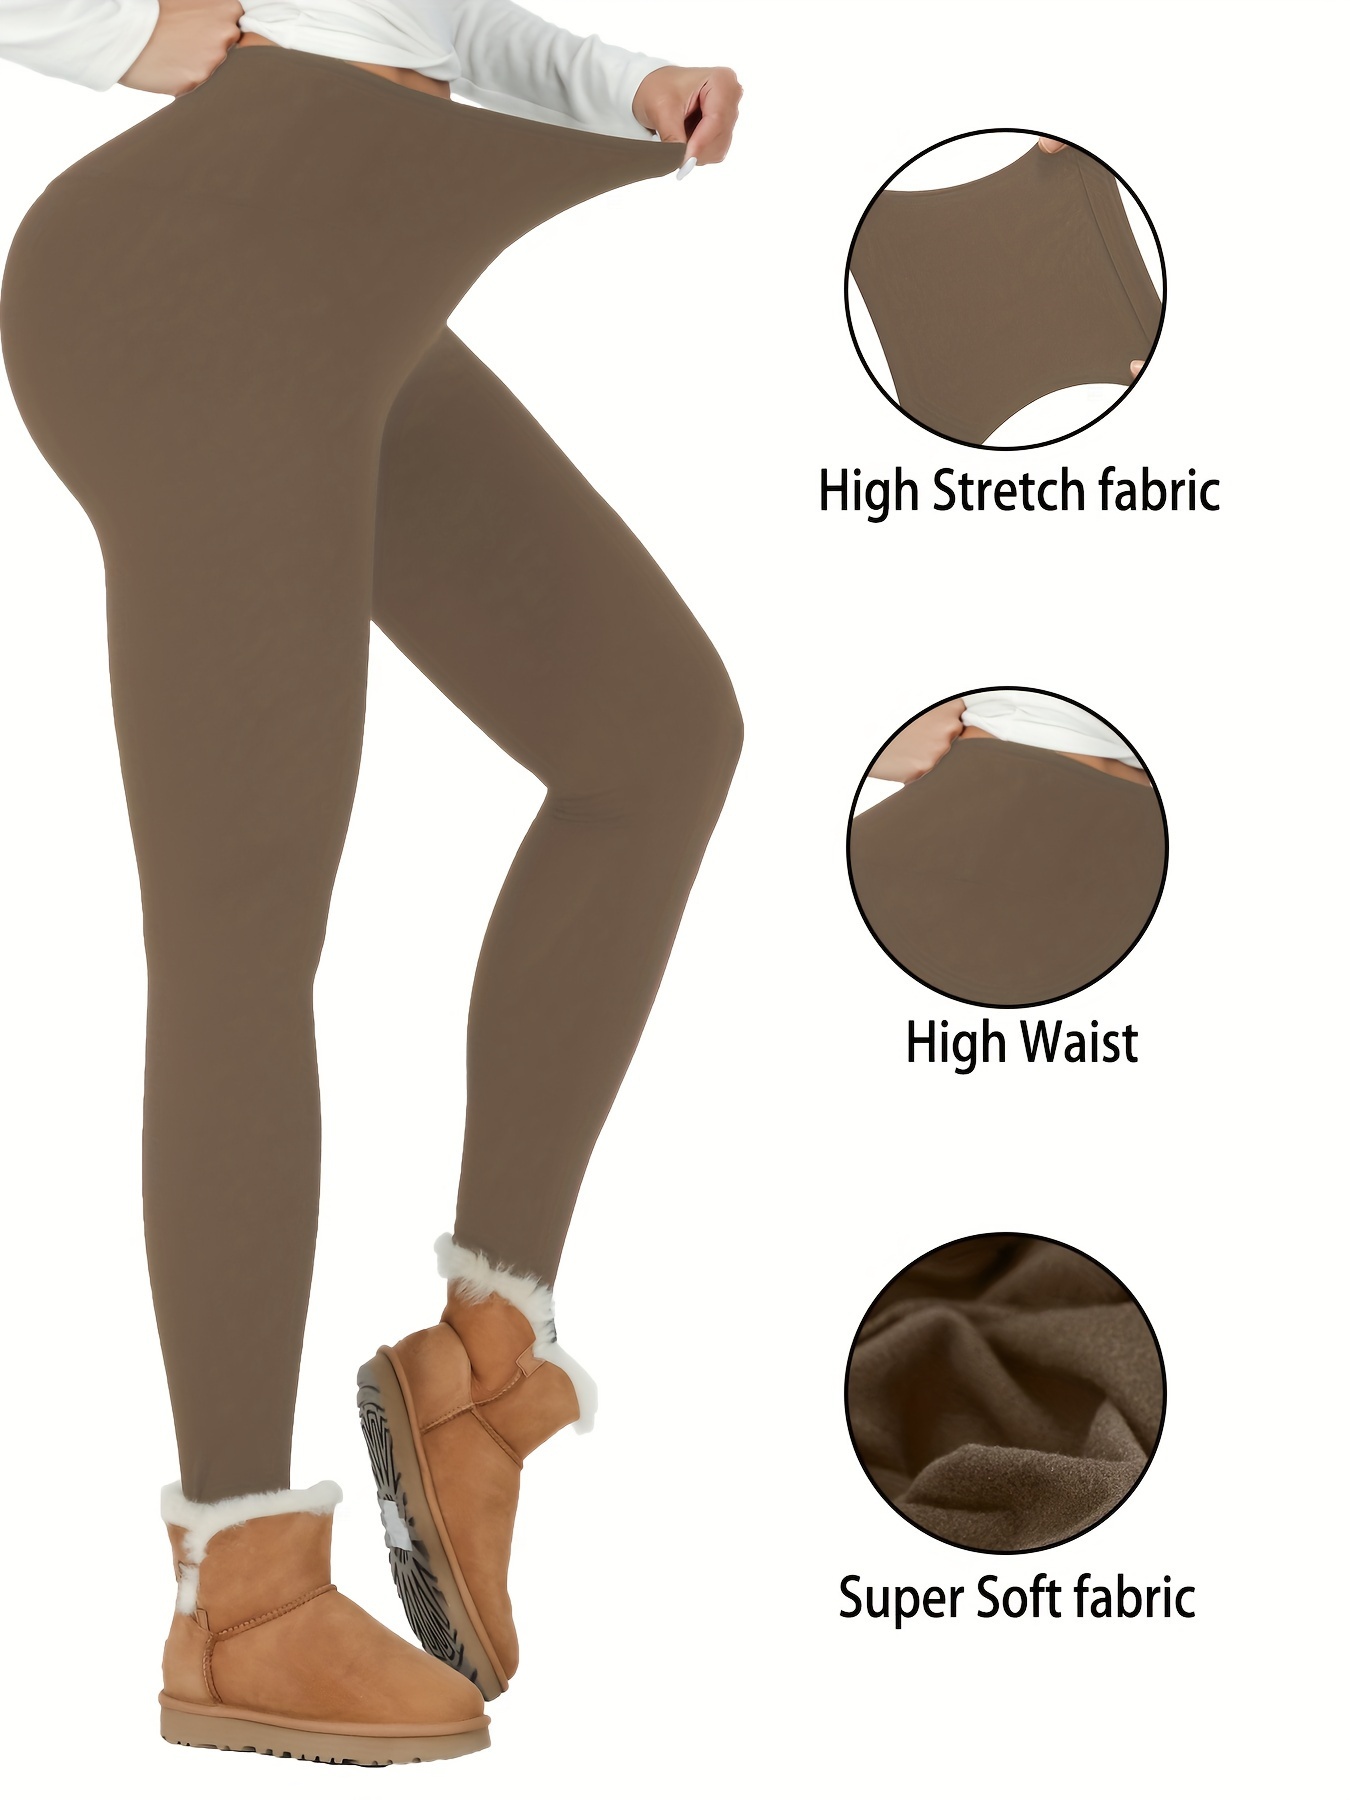 Winter Warm Leggings Women Elastic Thermal Legging Pants Fleece Lined Thick  Tights